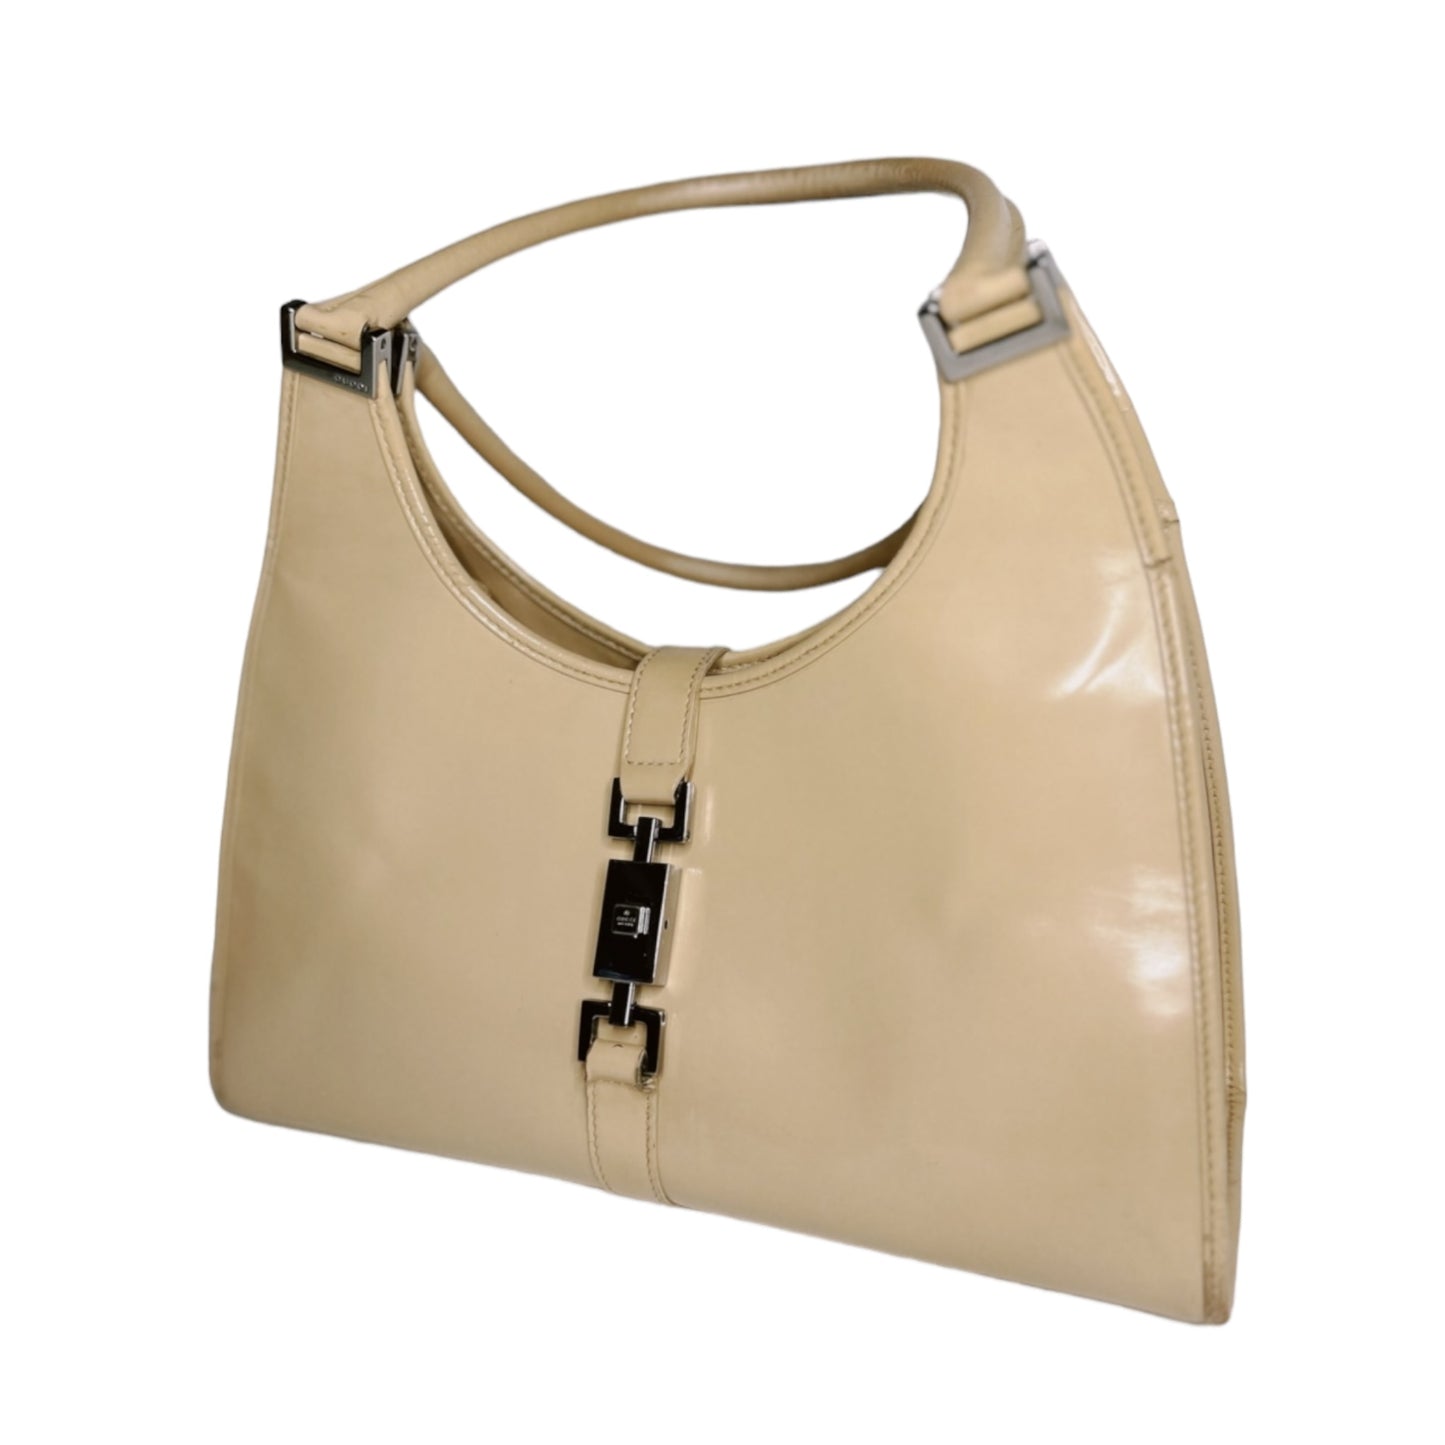 Vintage Gucci Jackie 1961 leather bag